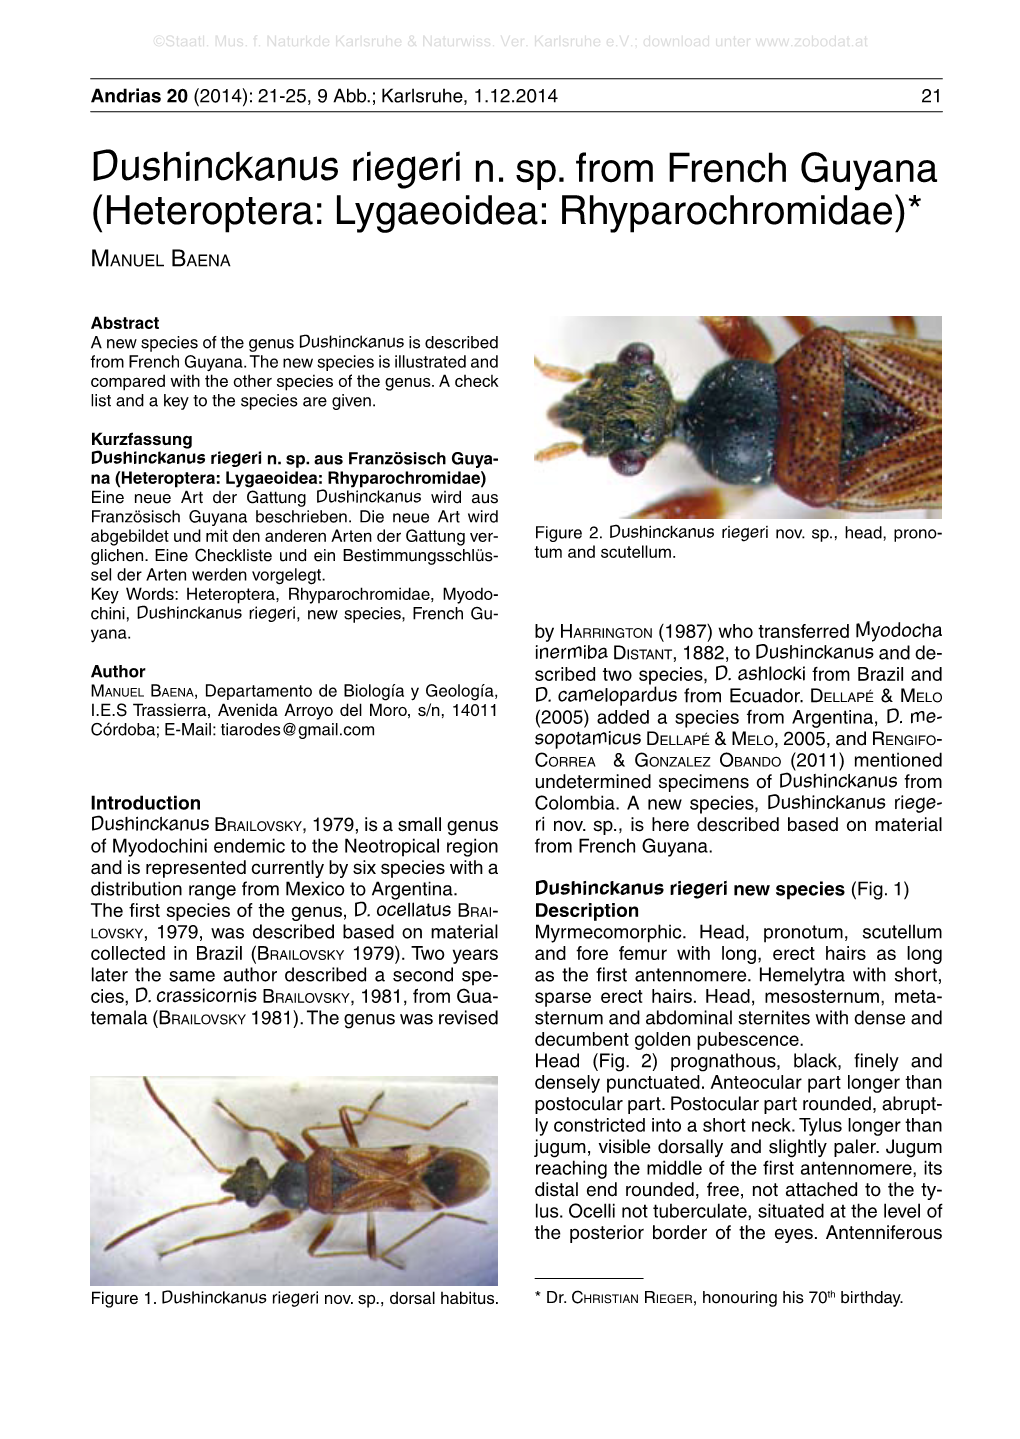 Dushinckanus Riegeri N. Sp. from French Guyana (Heteroptera: Lygaeoidea: Rhyparochromidae)*